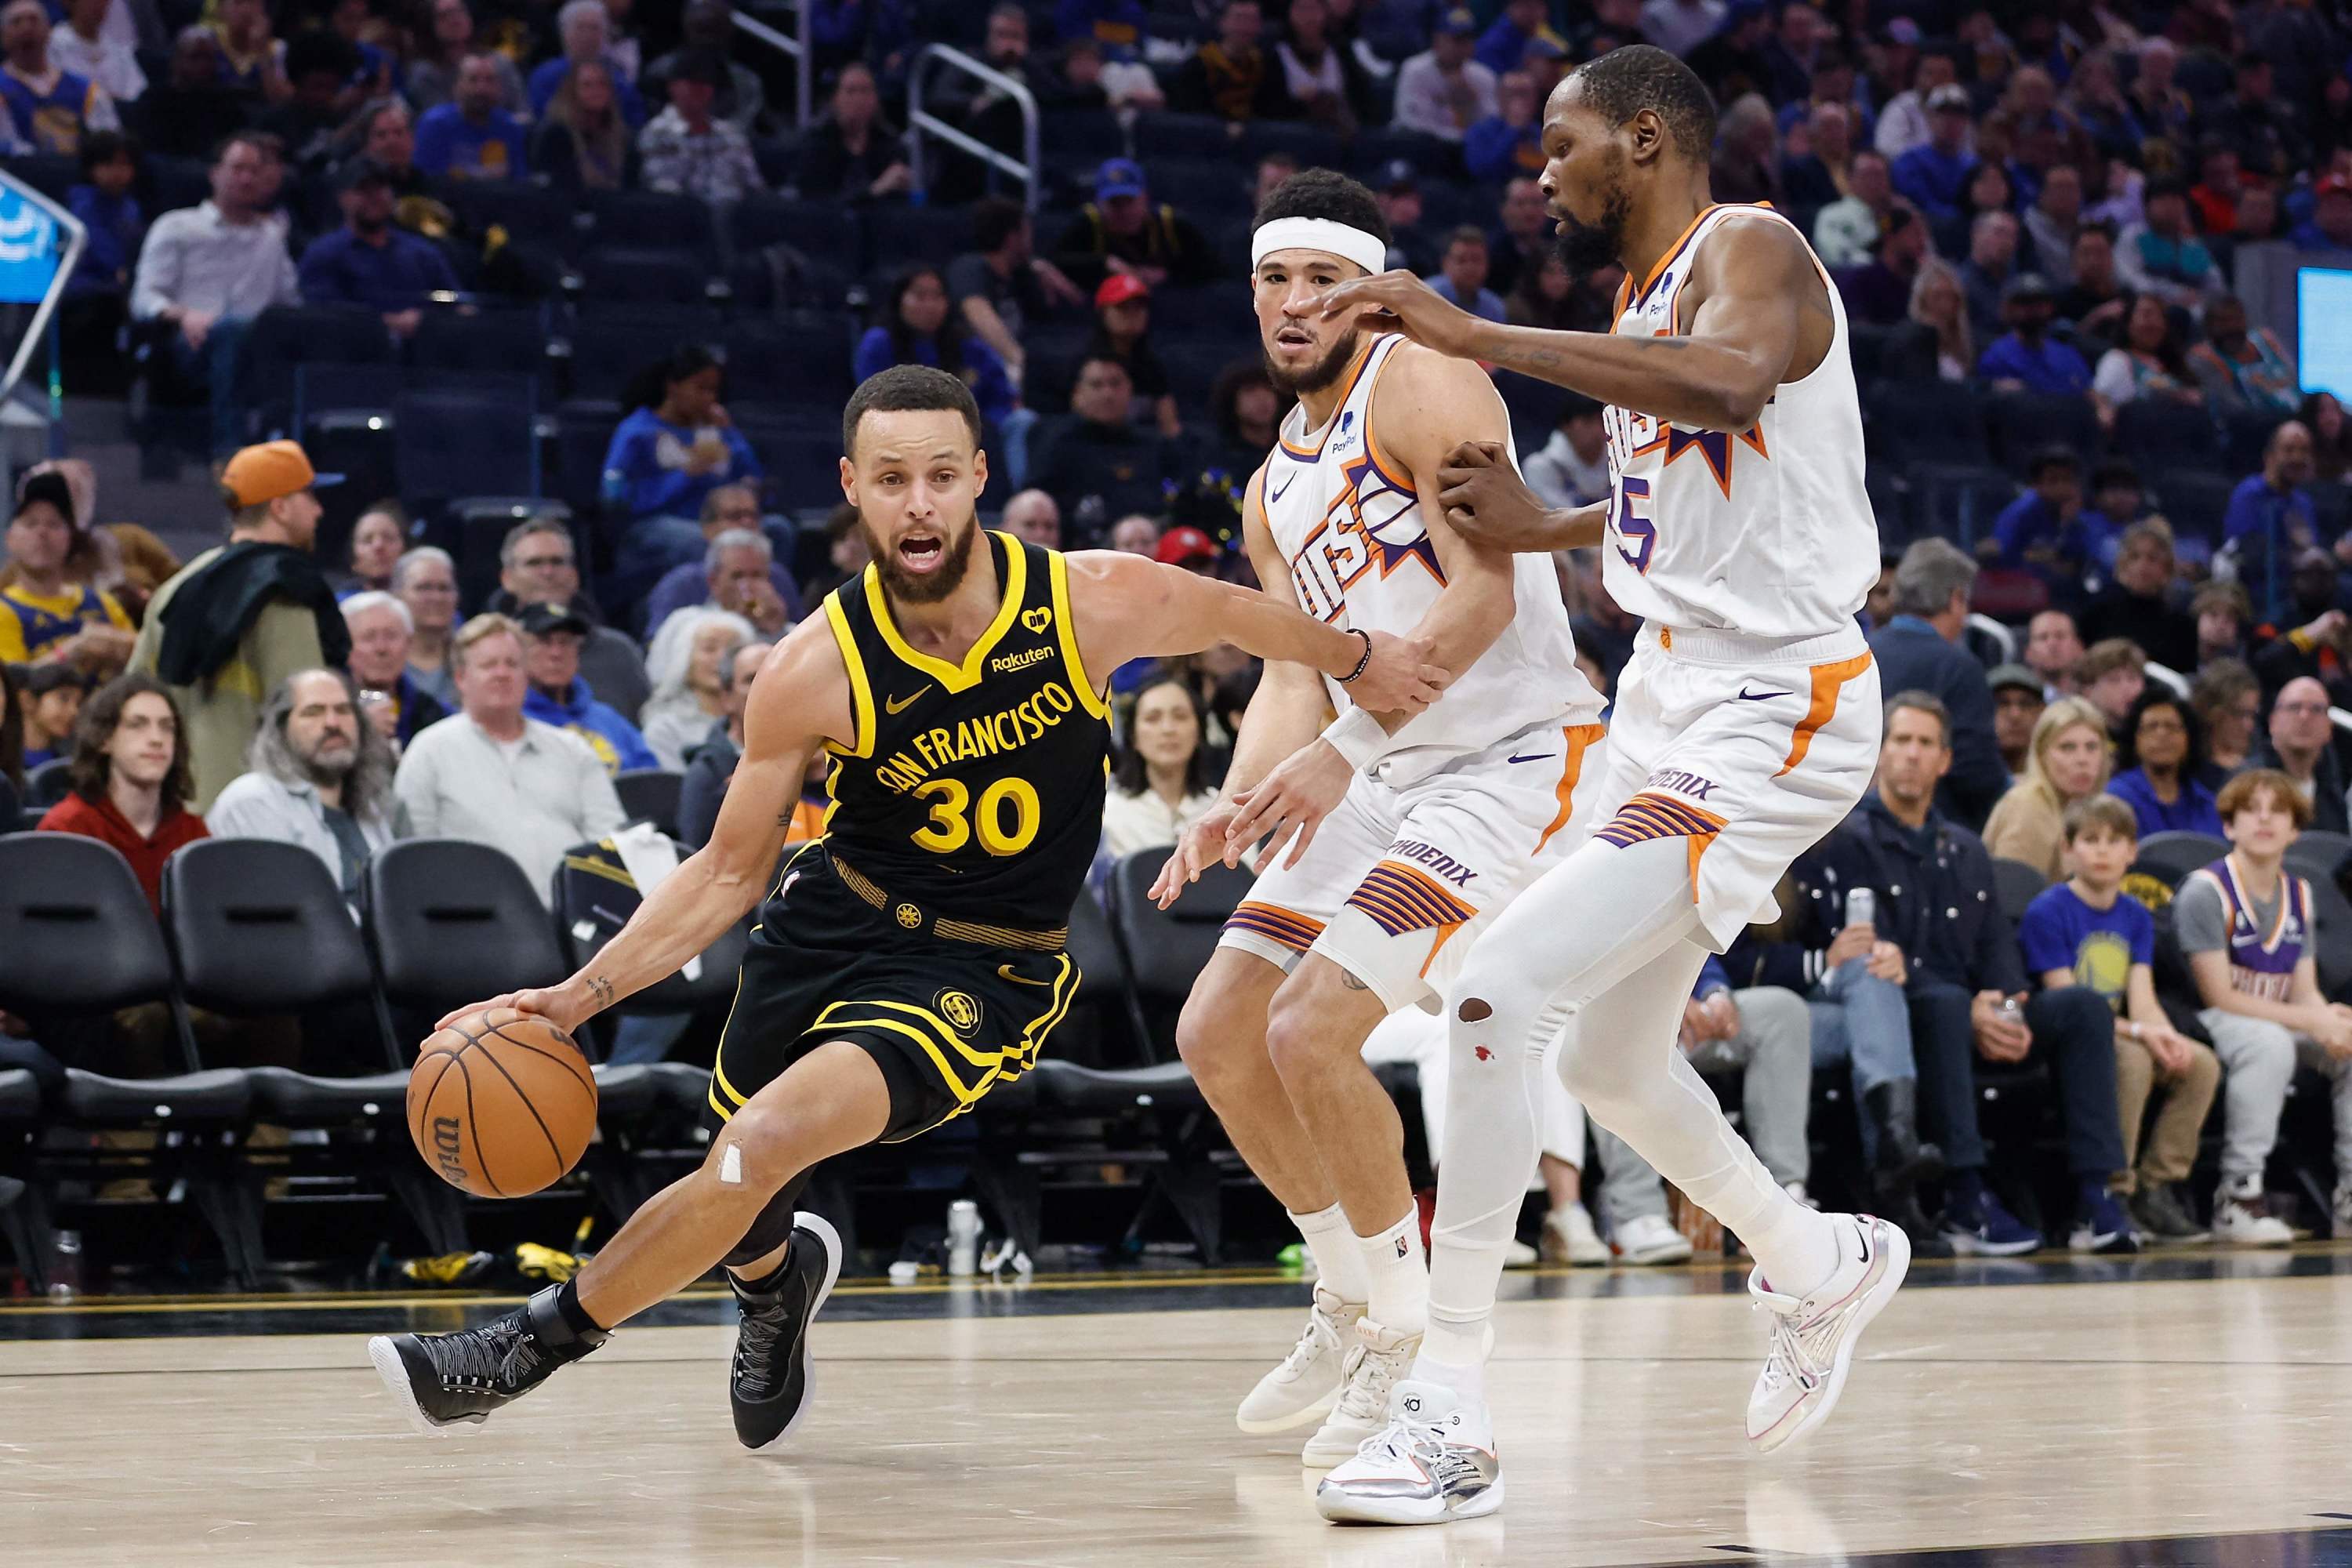 Basket : Booker, Holiday, Edwards… Qui pour accompagner LeBron, Curry et Durant aux JO 2024 ?